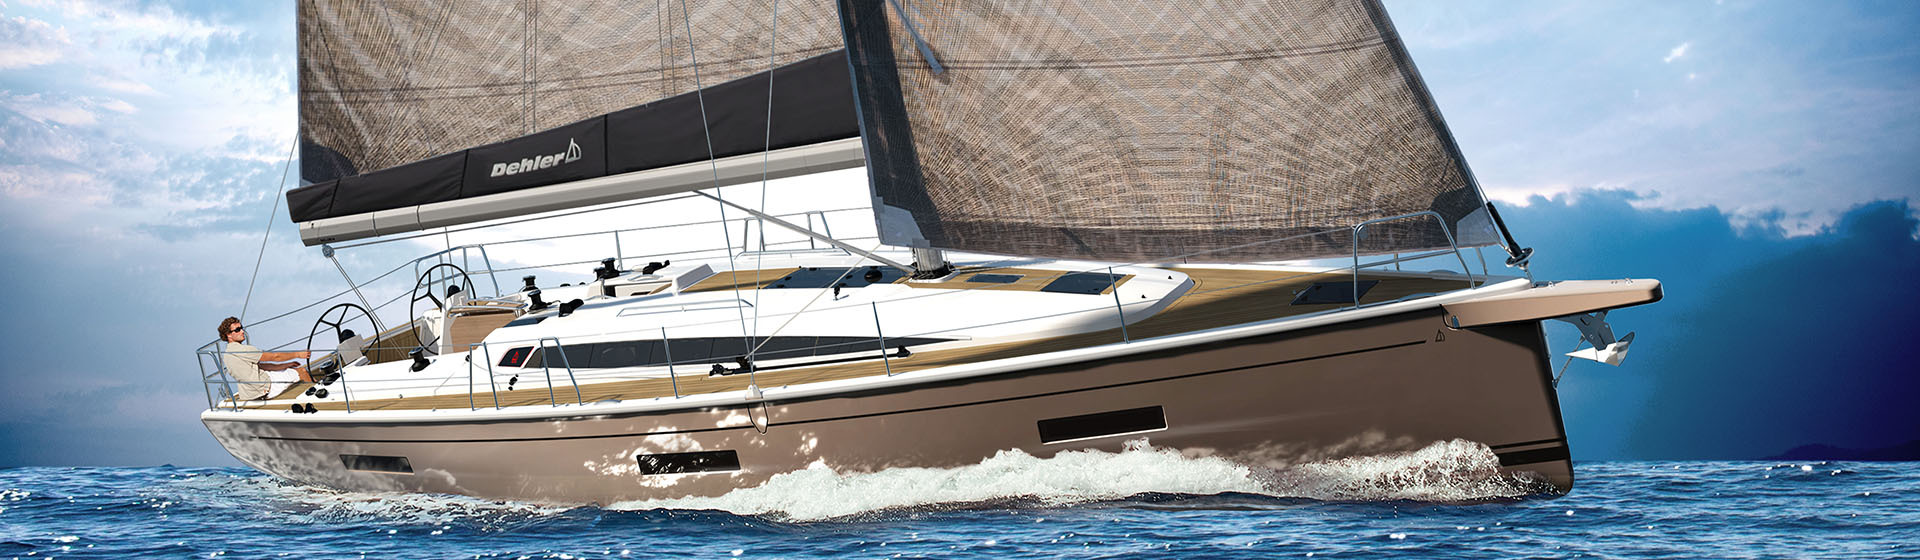 Sailing yacht Dehler 46 SQ - the new flagship